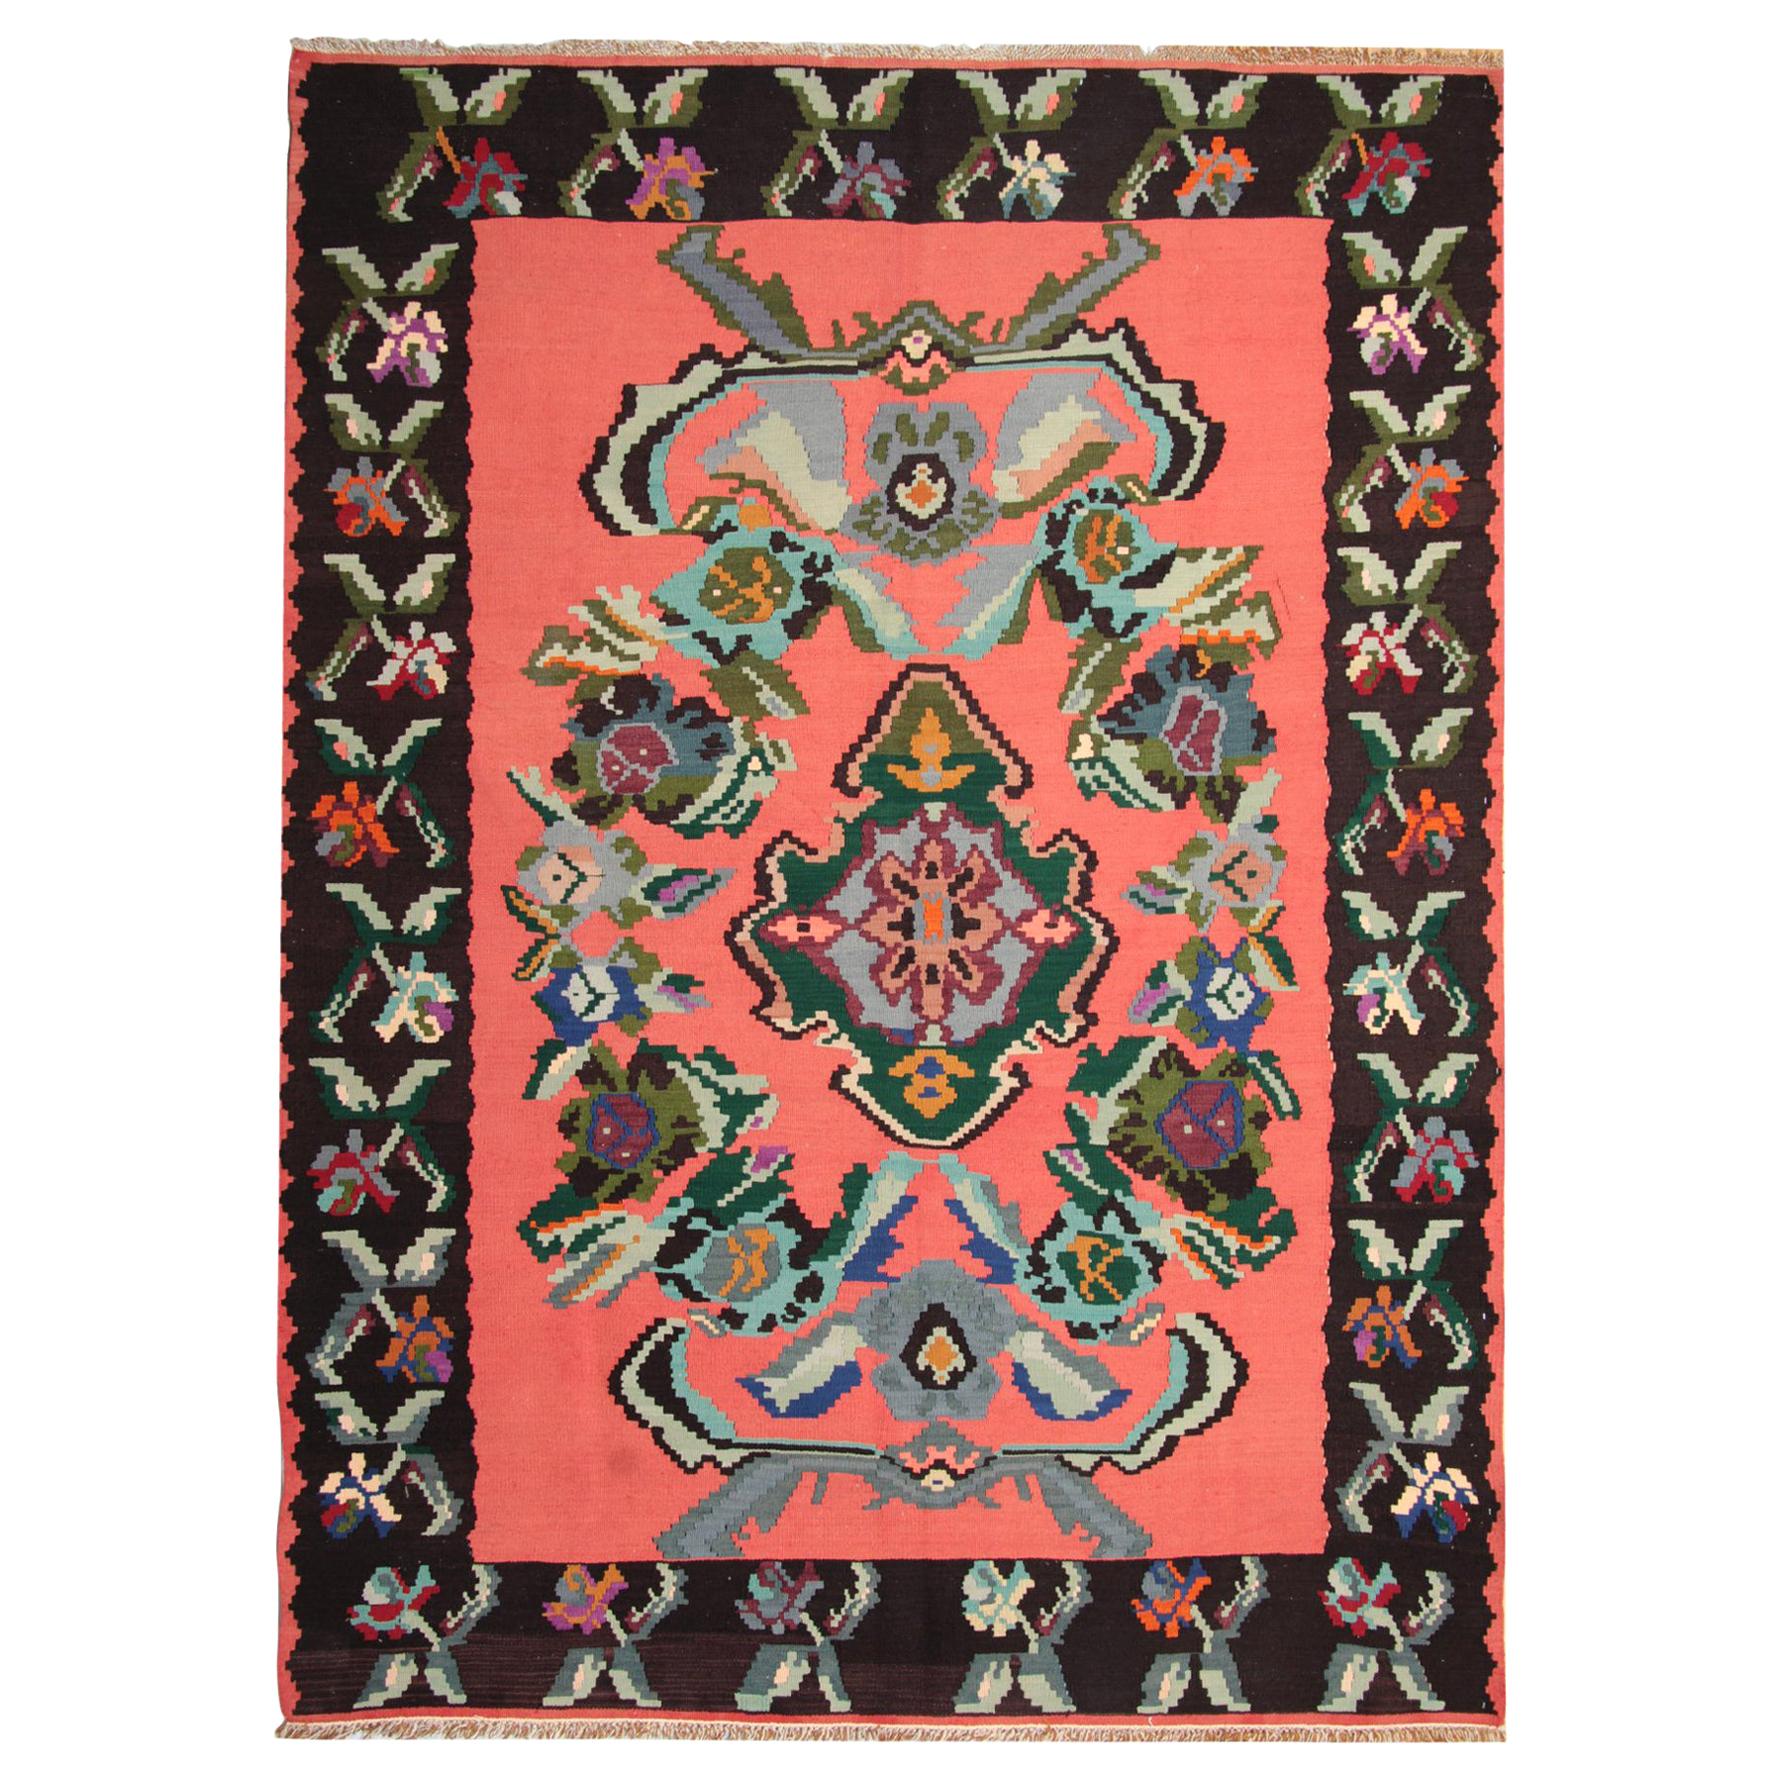 Tapis Kilim vintage, tapis traditionnel turc fait main, tapis oriental